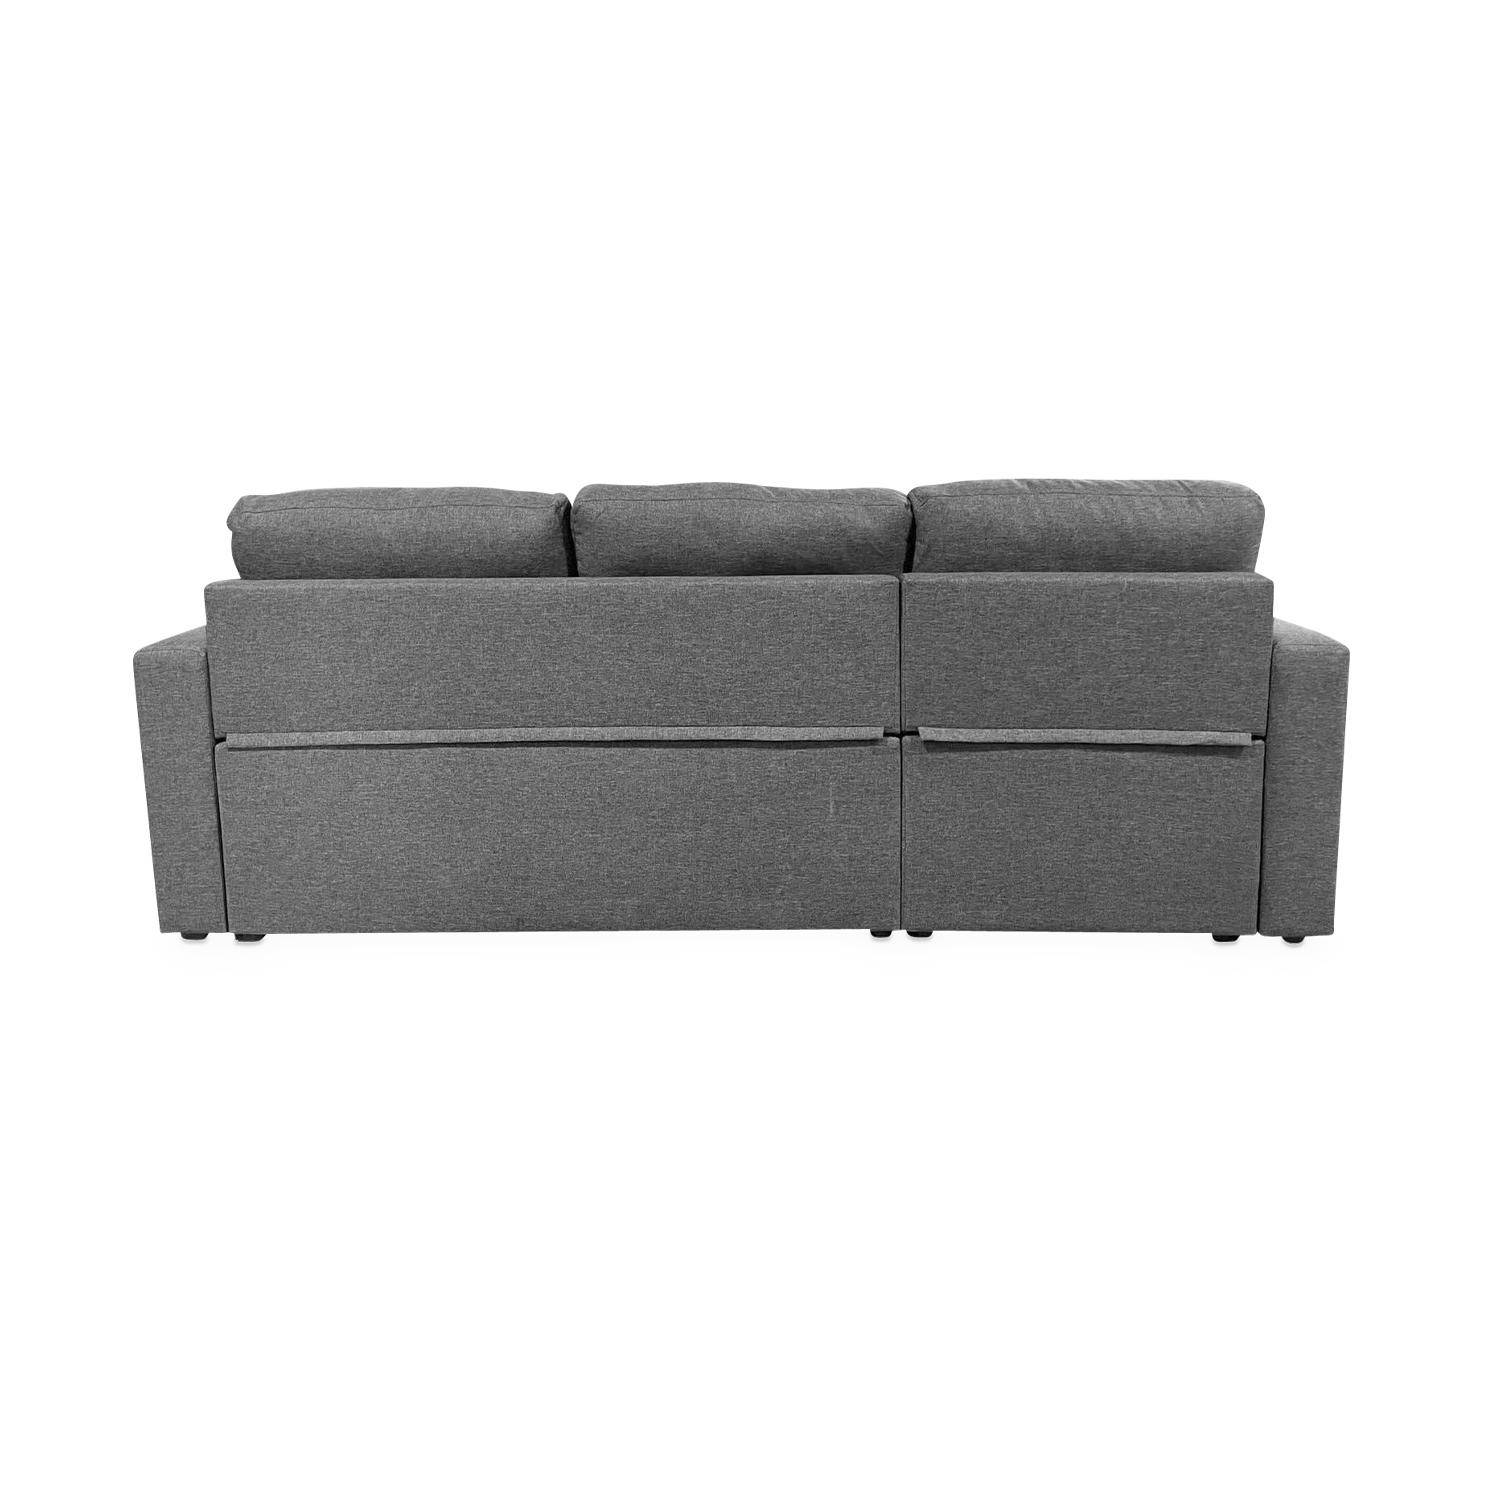 3-seater reversible grey corner sofa bed with storage box, : L219xD81xH68cm, IDA Photo9